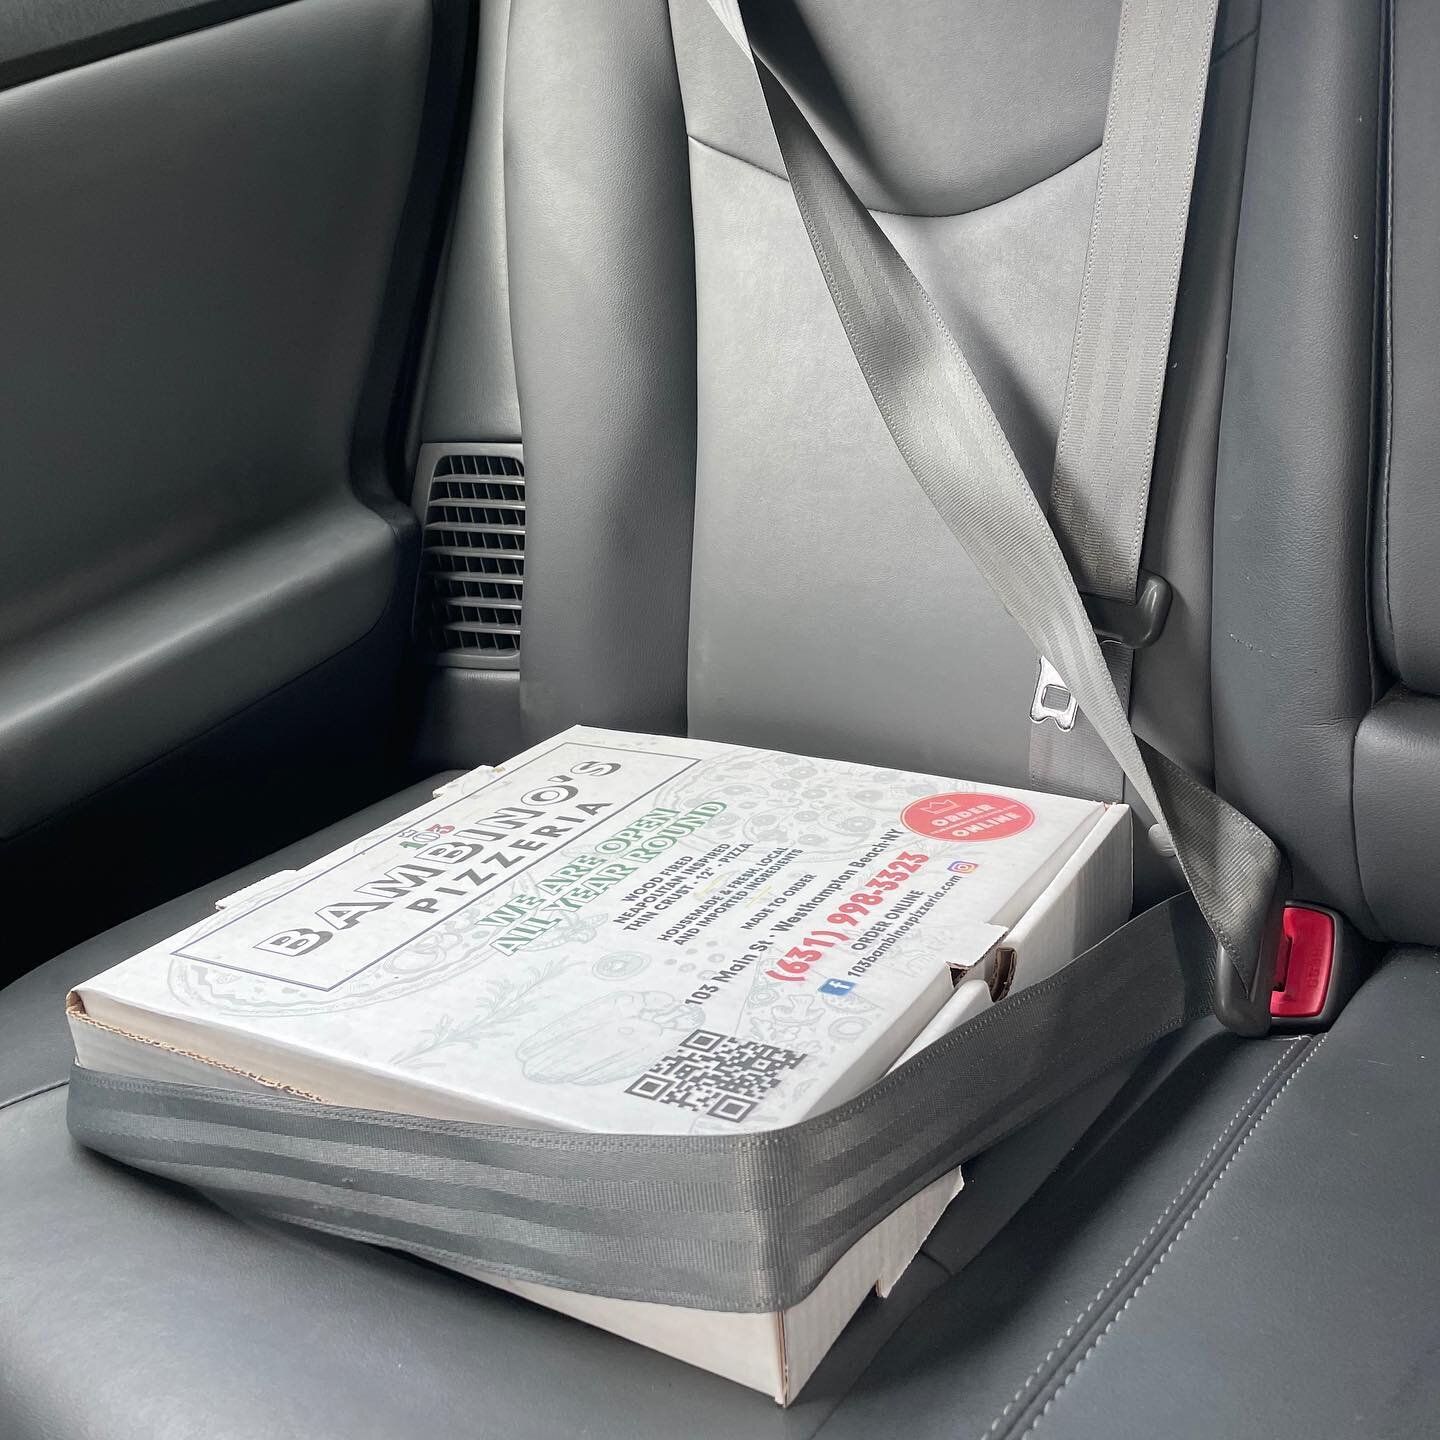 Precious cargo 
#saftyfirst #pizza